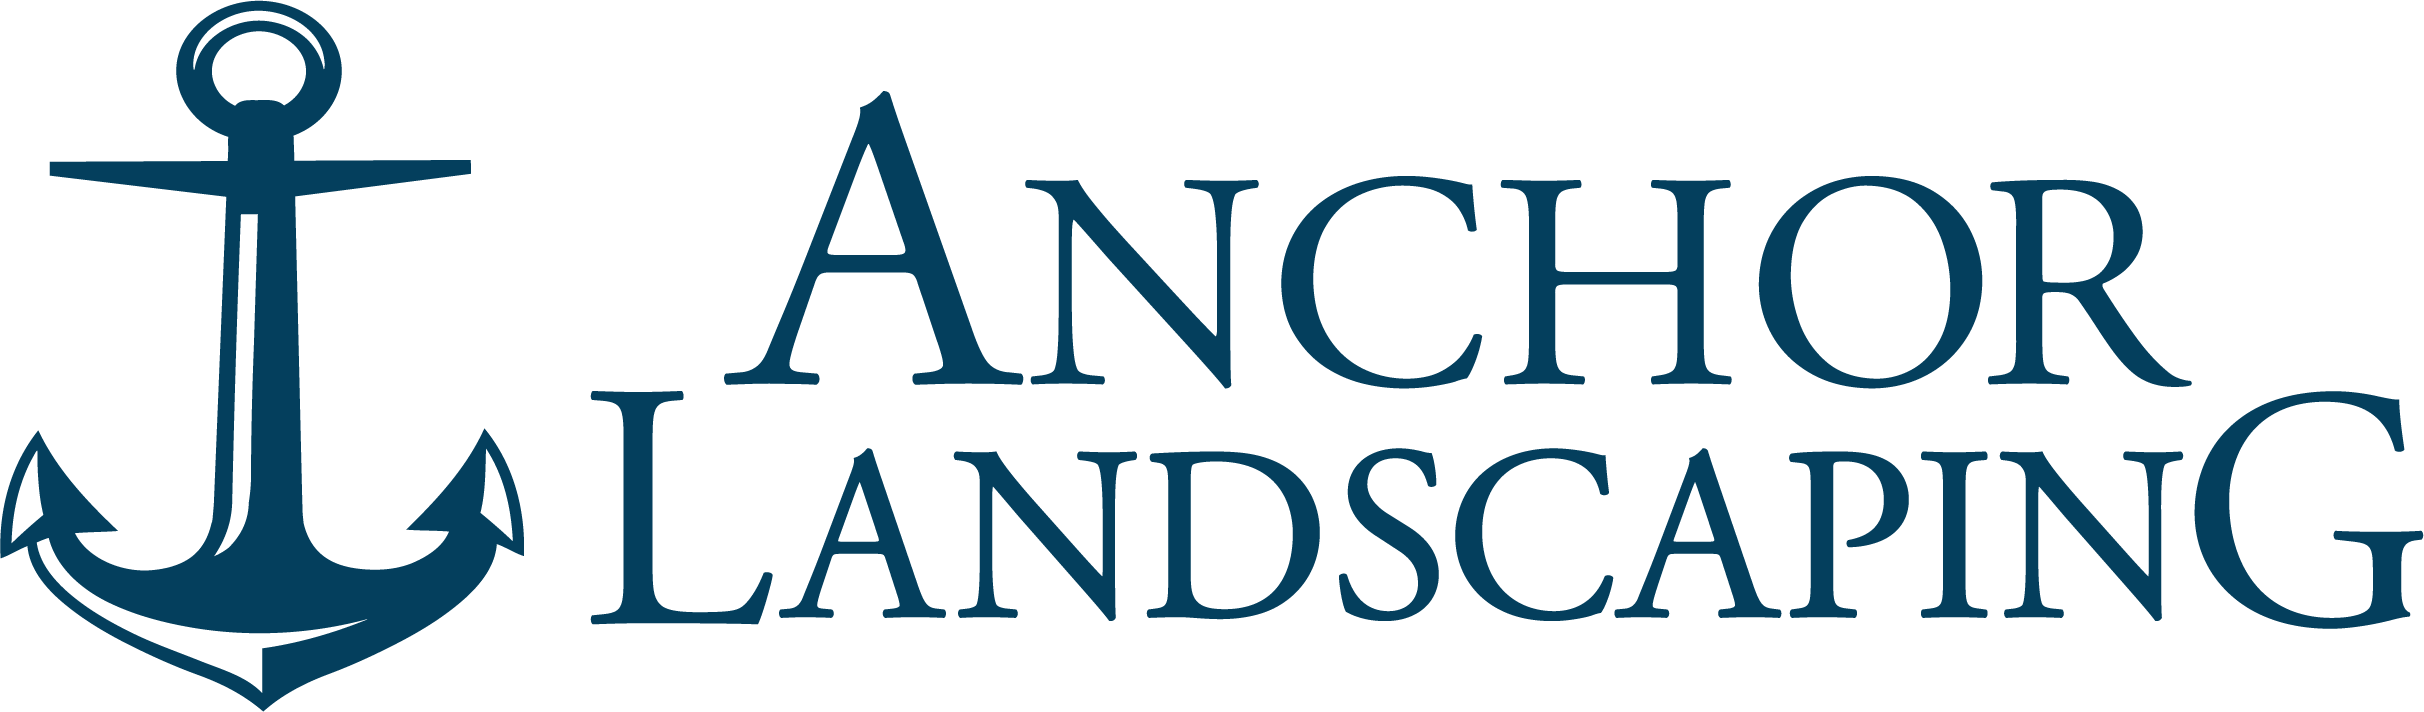 anchor landscaping logo